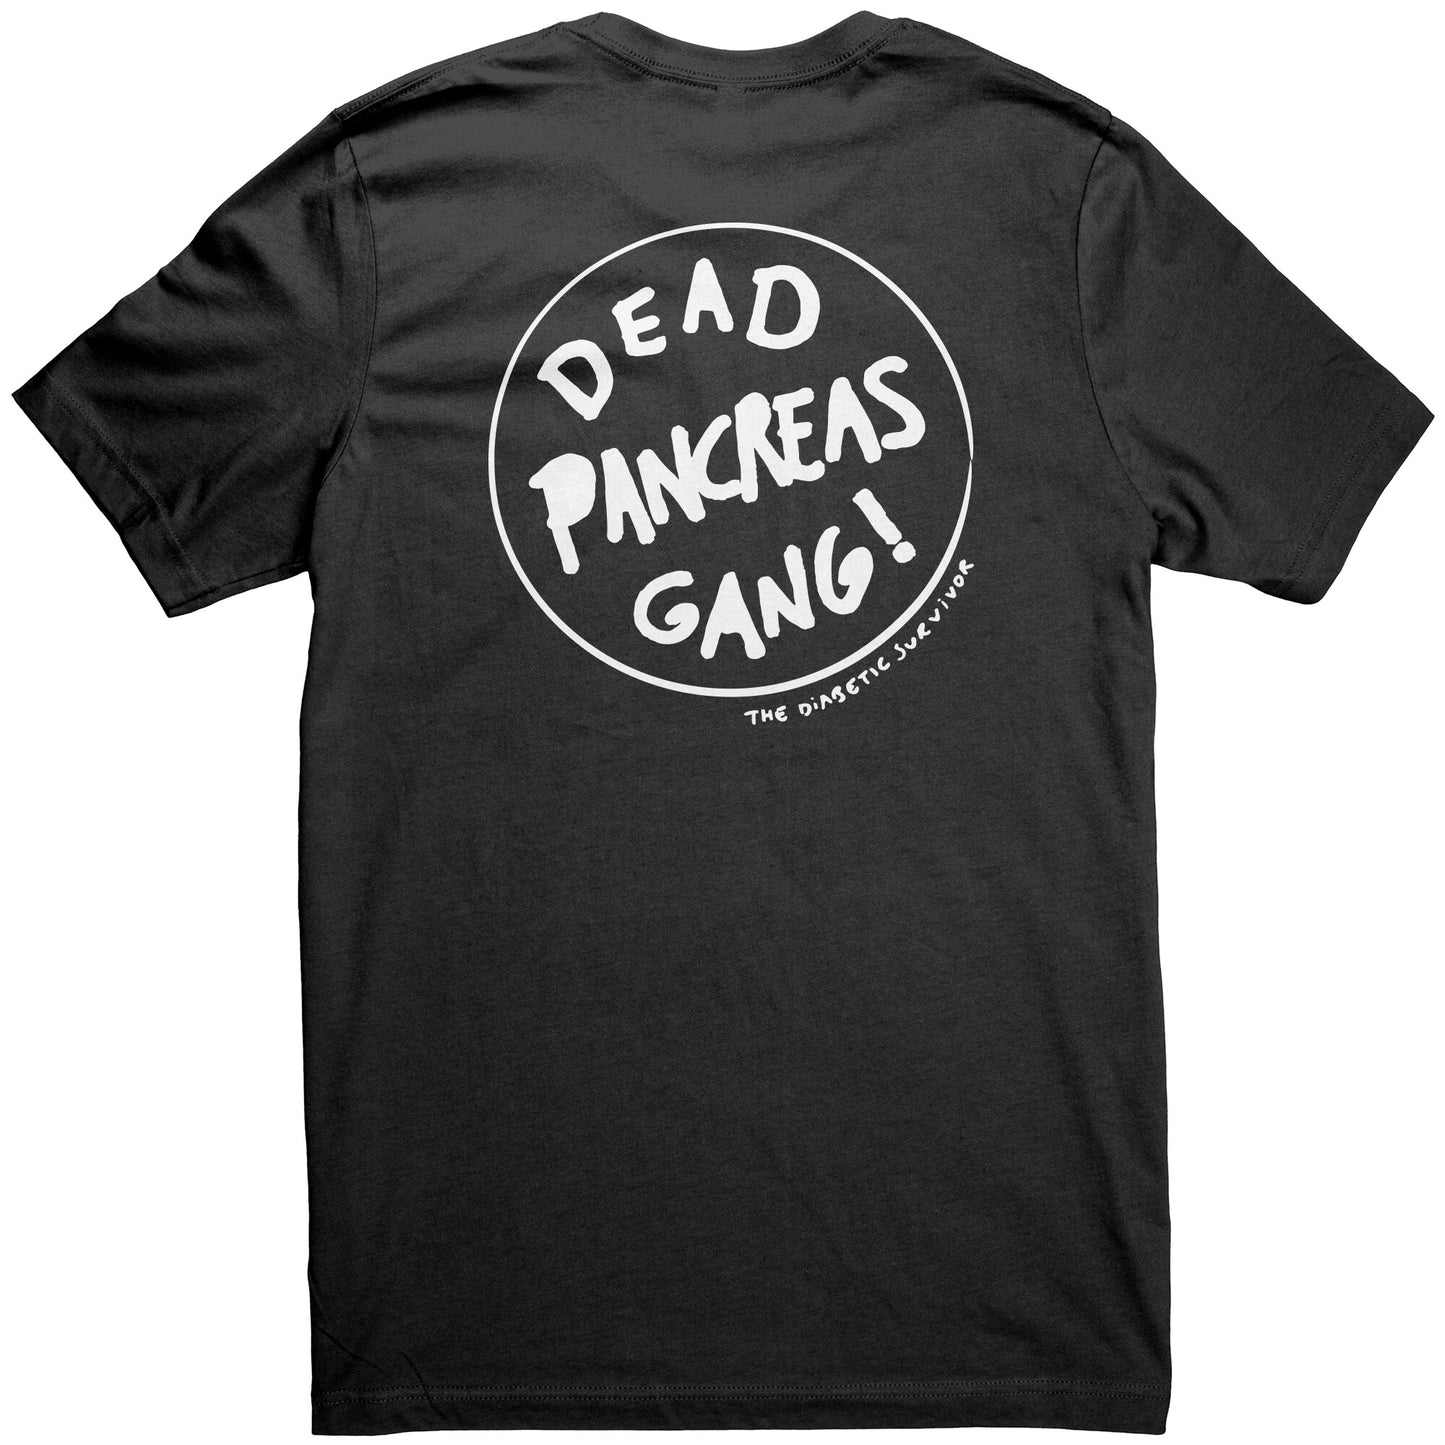 unisex t shirt dead pancreas gang back